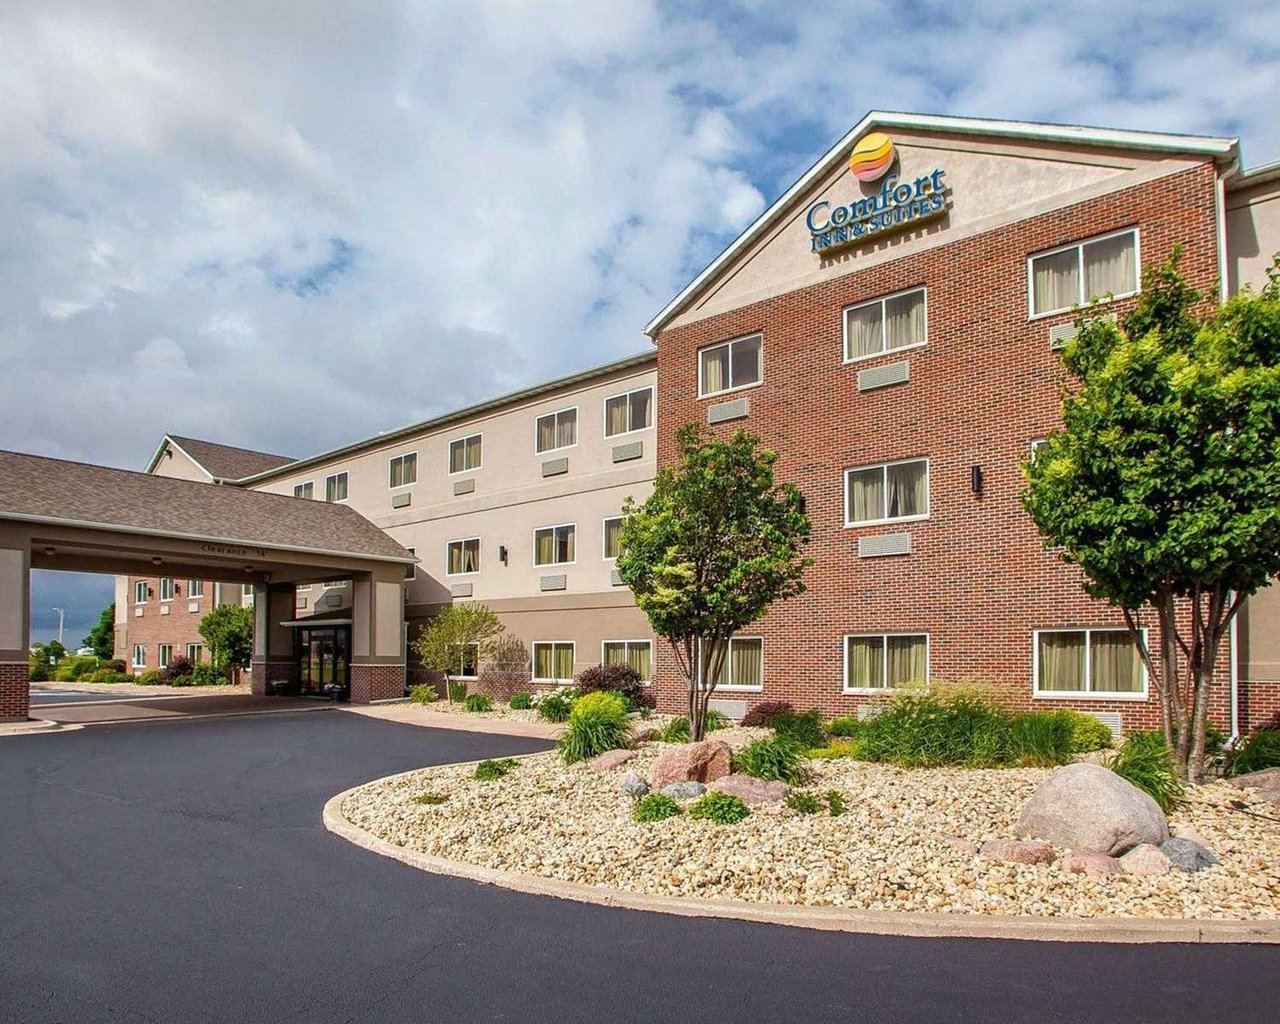 Photo of Comfort Inn & Suites Davenport - Quad Cities, Davenport, IA